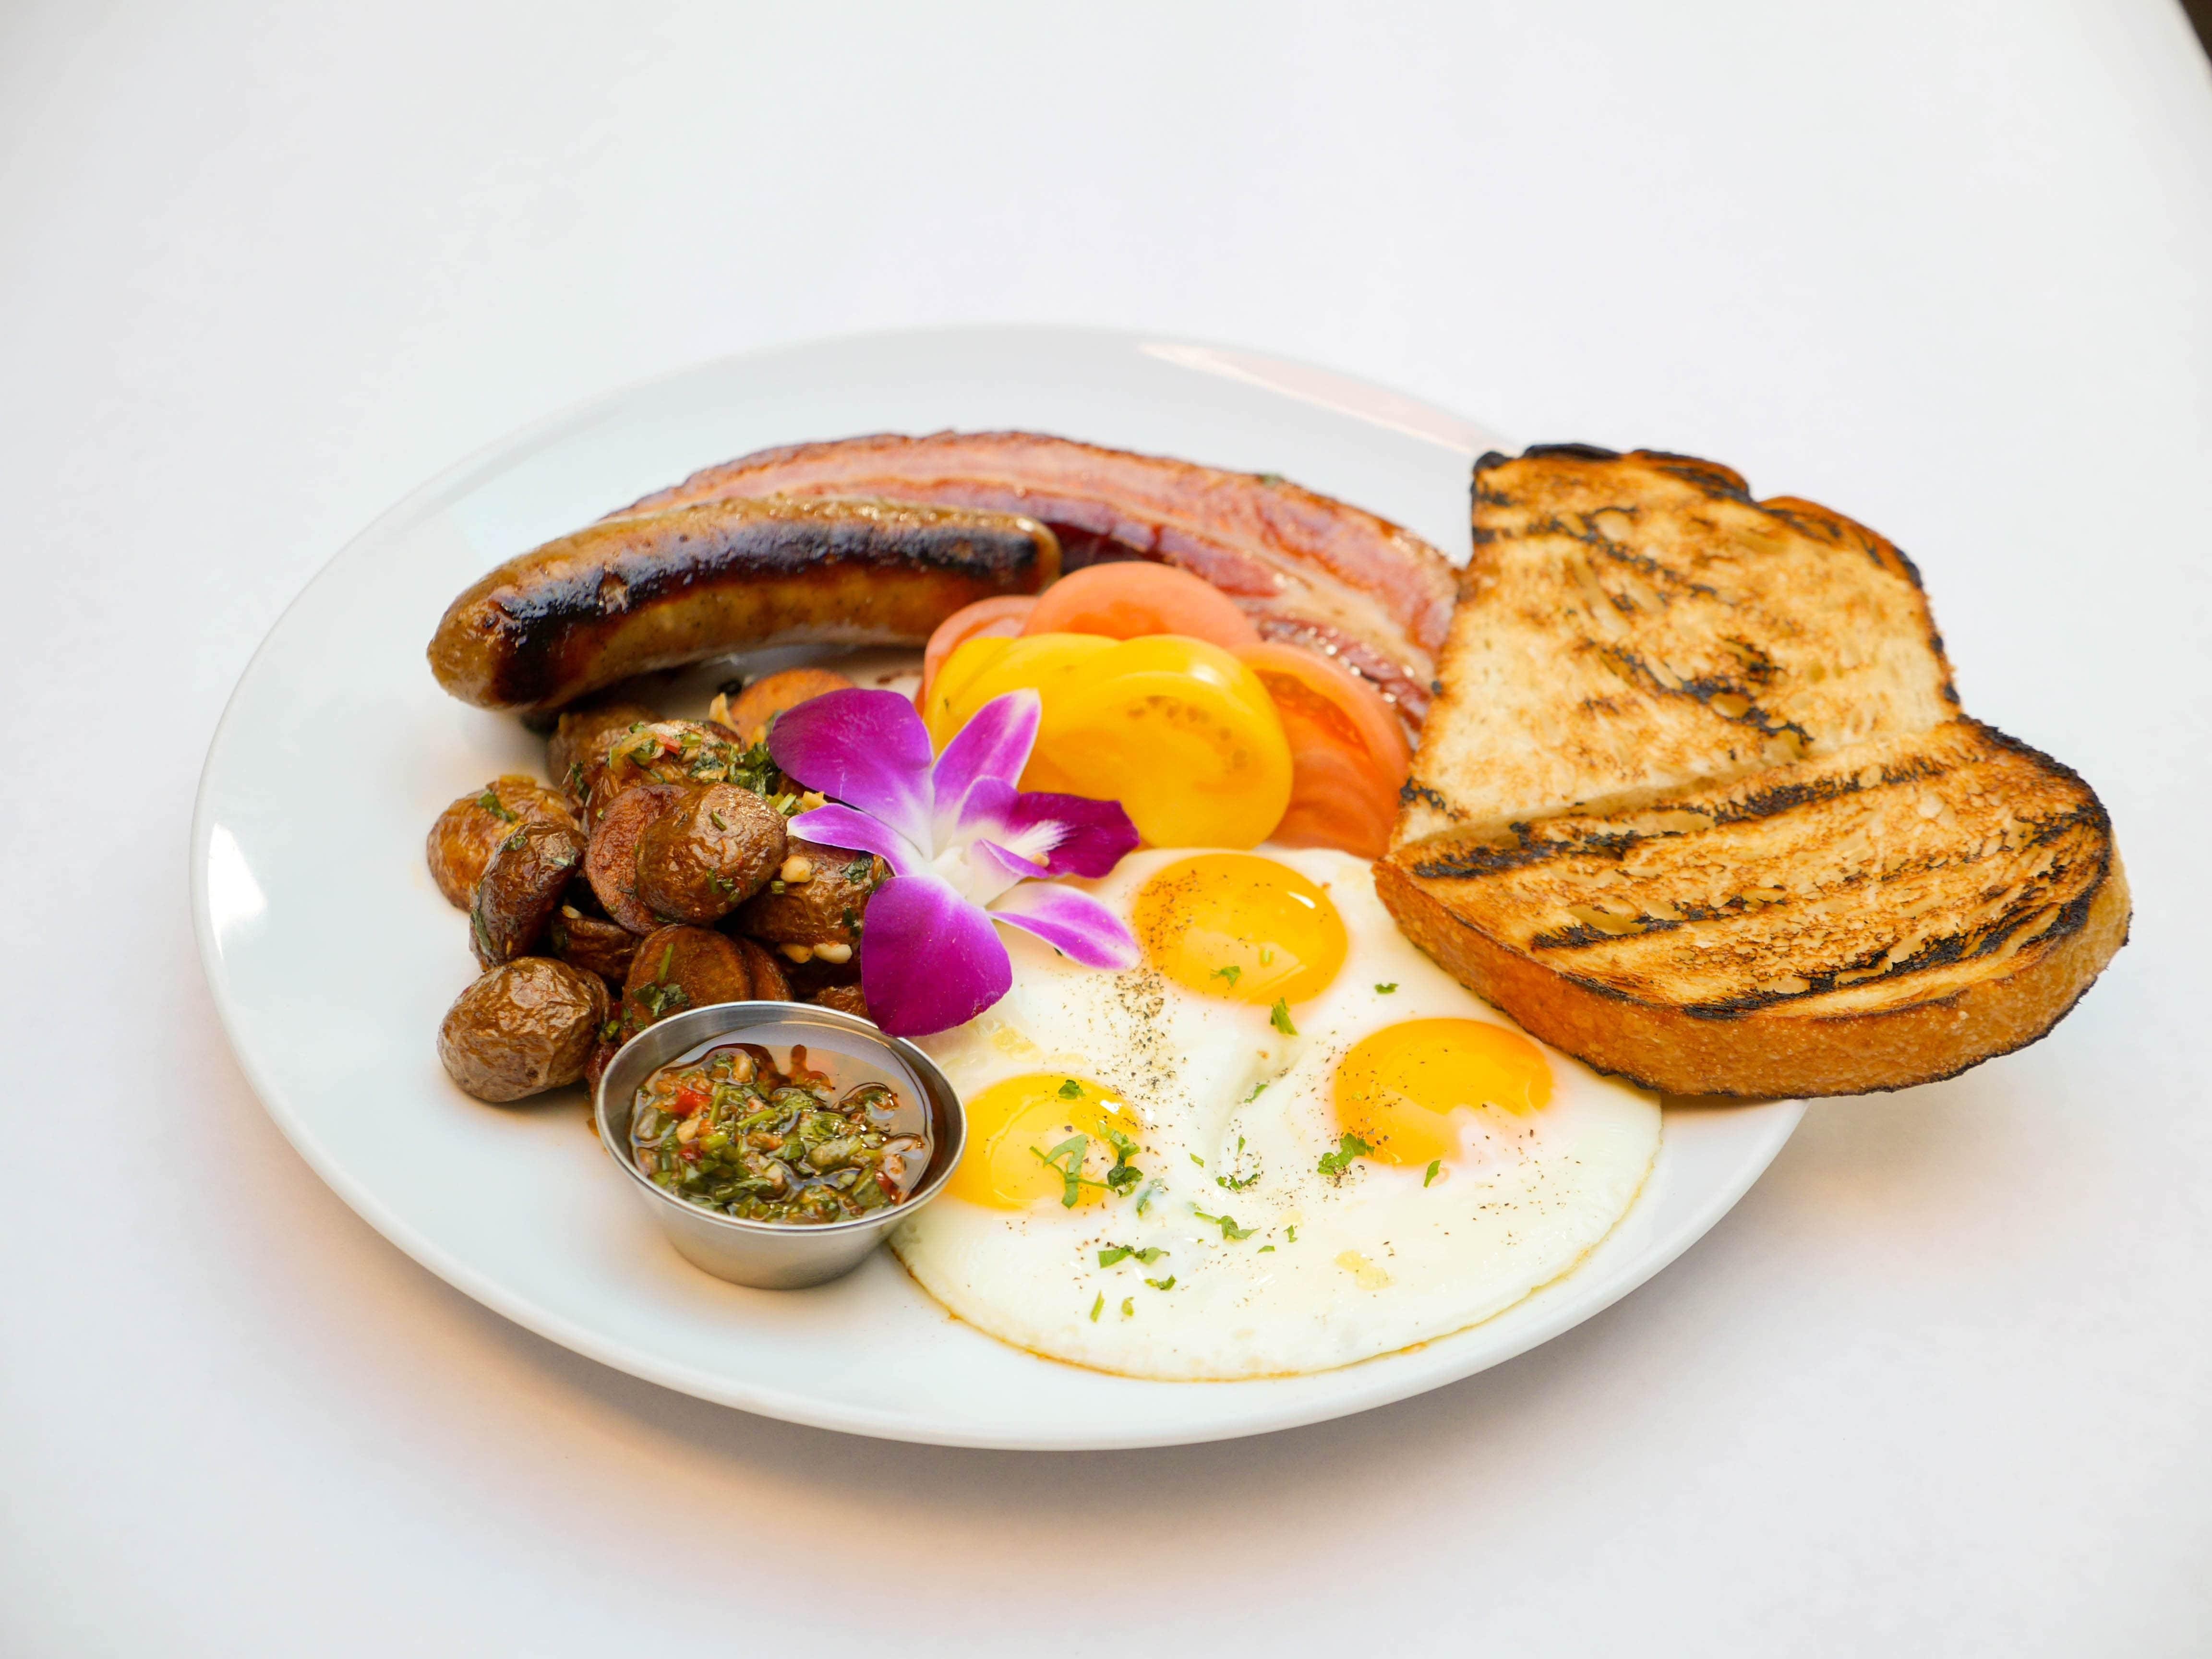 King's Breakfast Platter